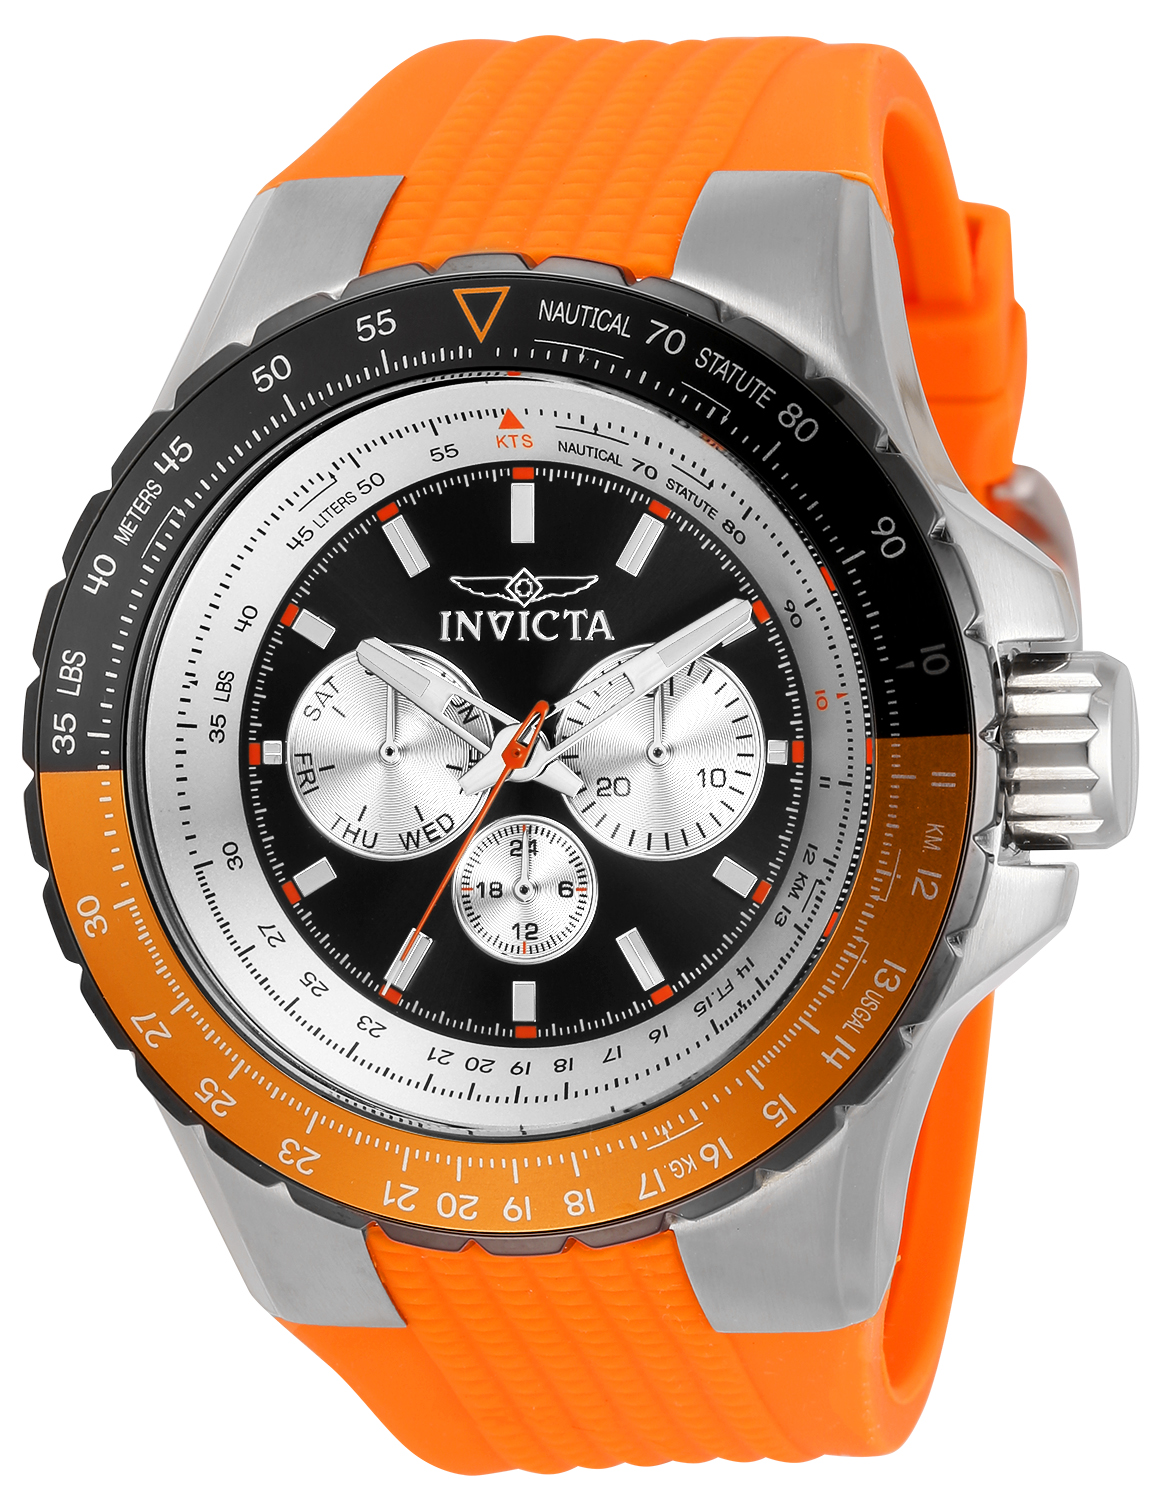 Invicta Aviator Men's Watch - 50mm, Orange (33035)